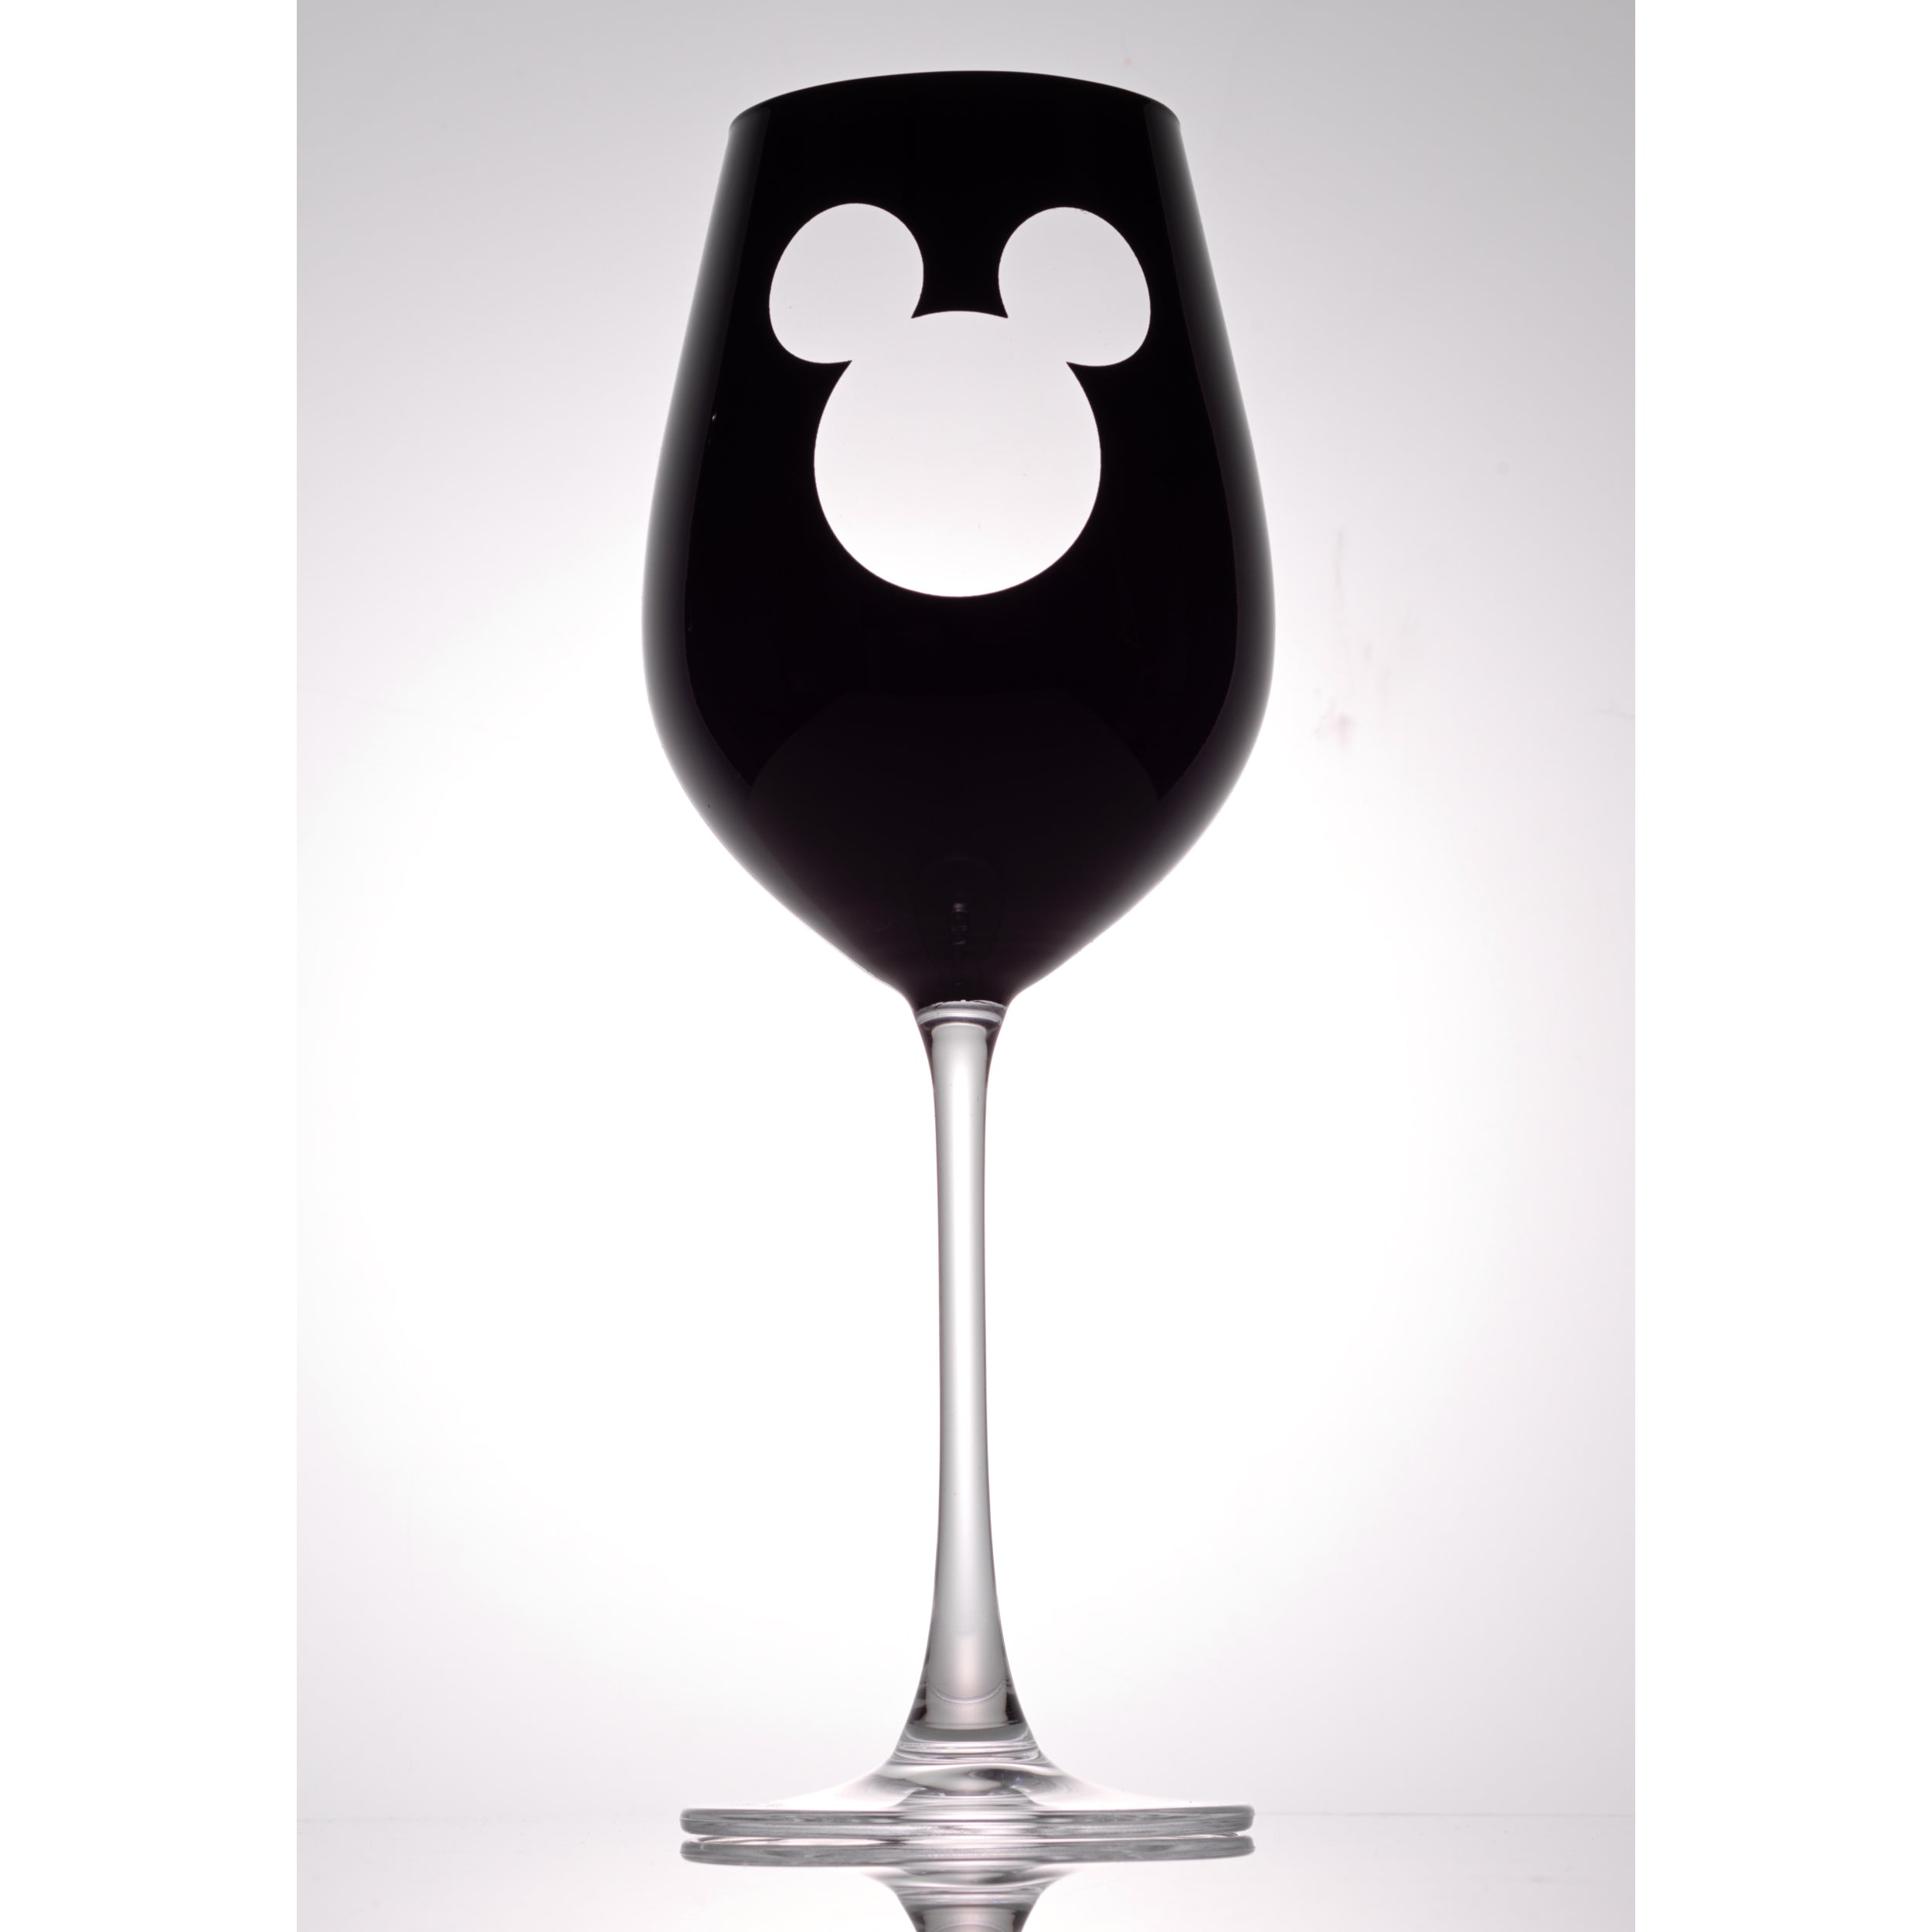 JoyJolt Disney Luxury Mickey Mouse Crystal Stemmed Red Wine Glass - 23 oz - Set of 2